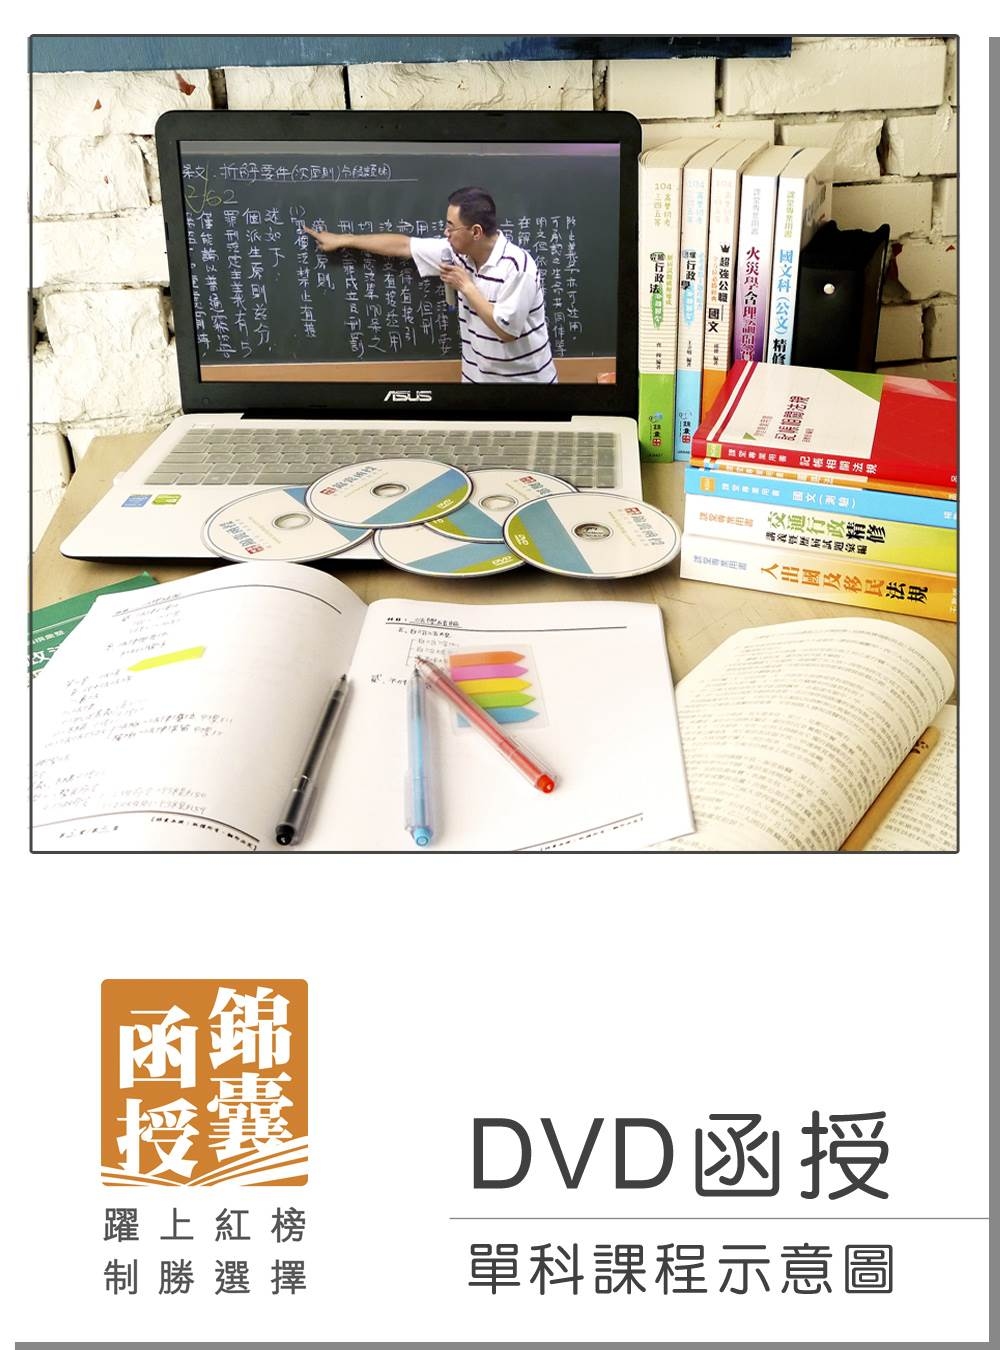 【DVD函授】勞工行政與勞工立法-單科課程(105版)